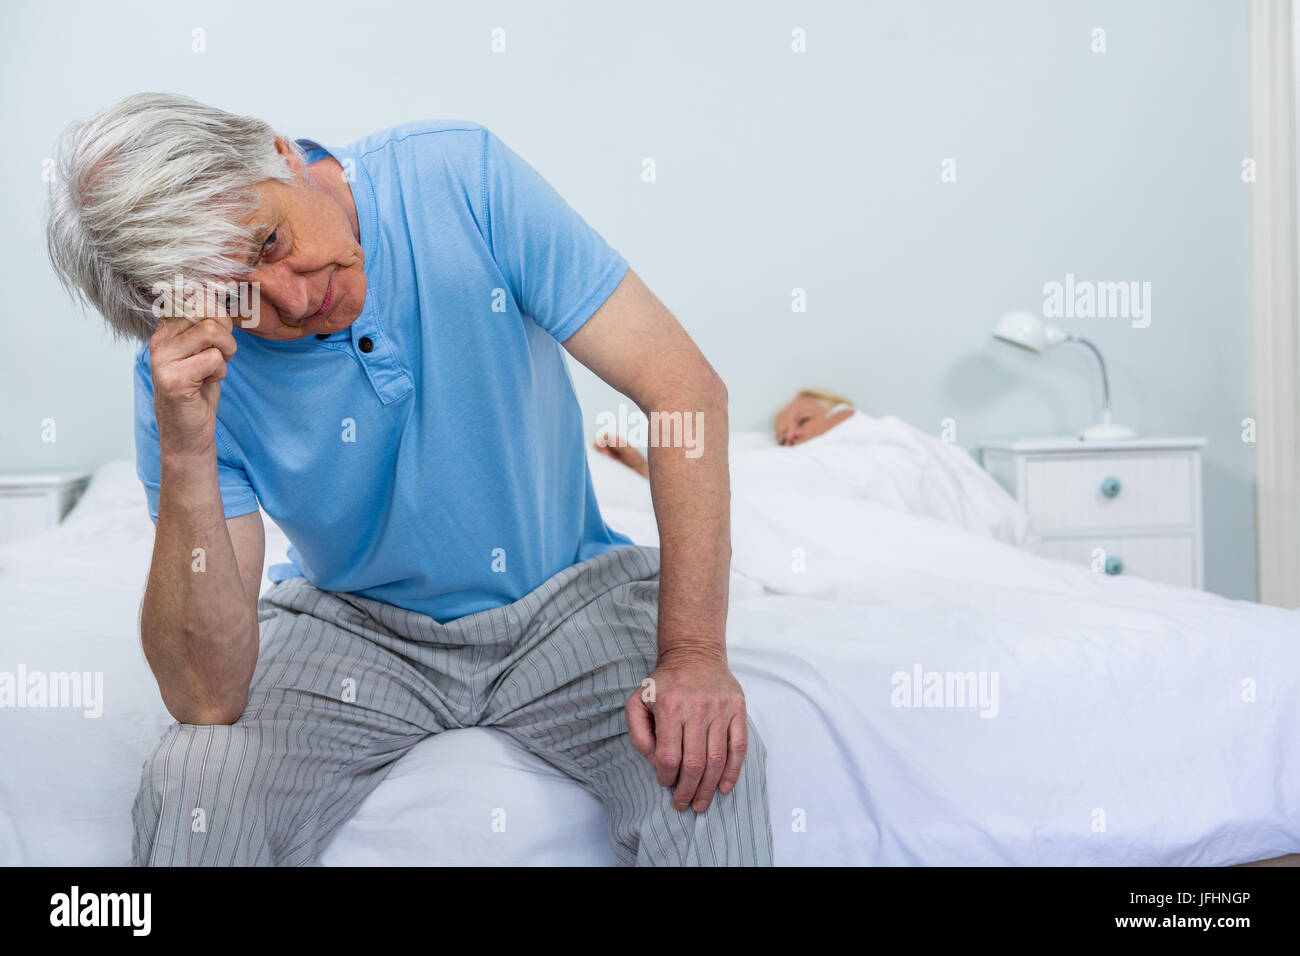 Upset senior man touching head while woman sleeping on bed Stock Photo